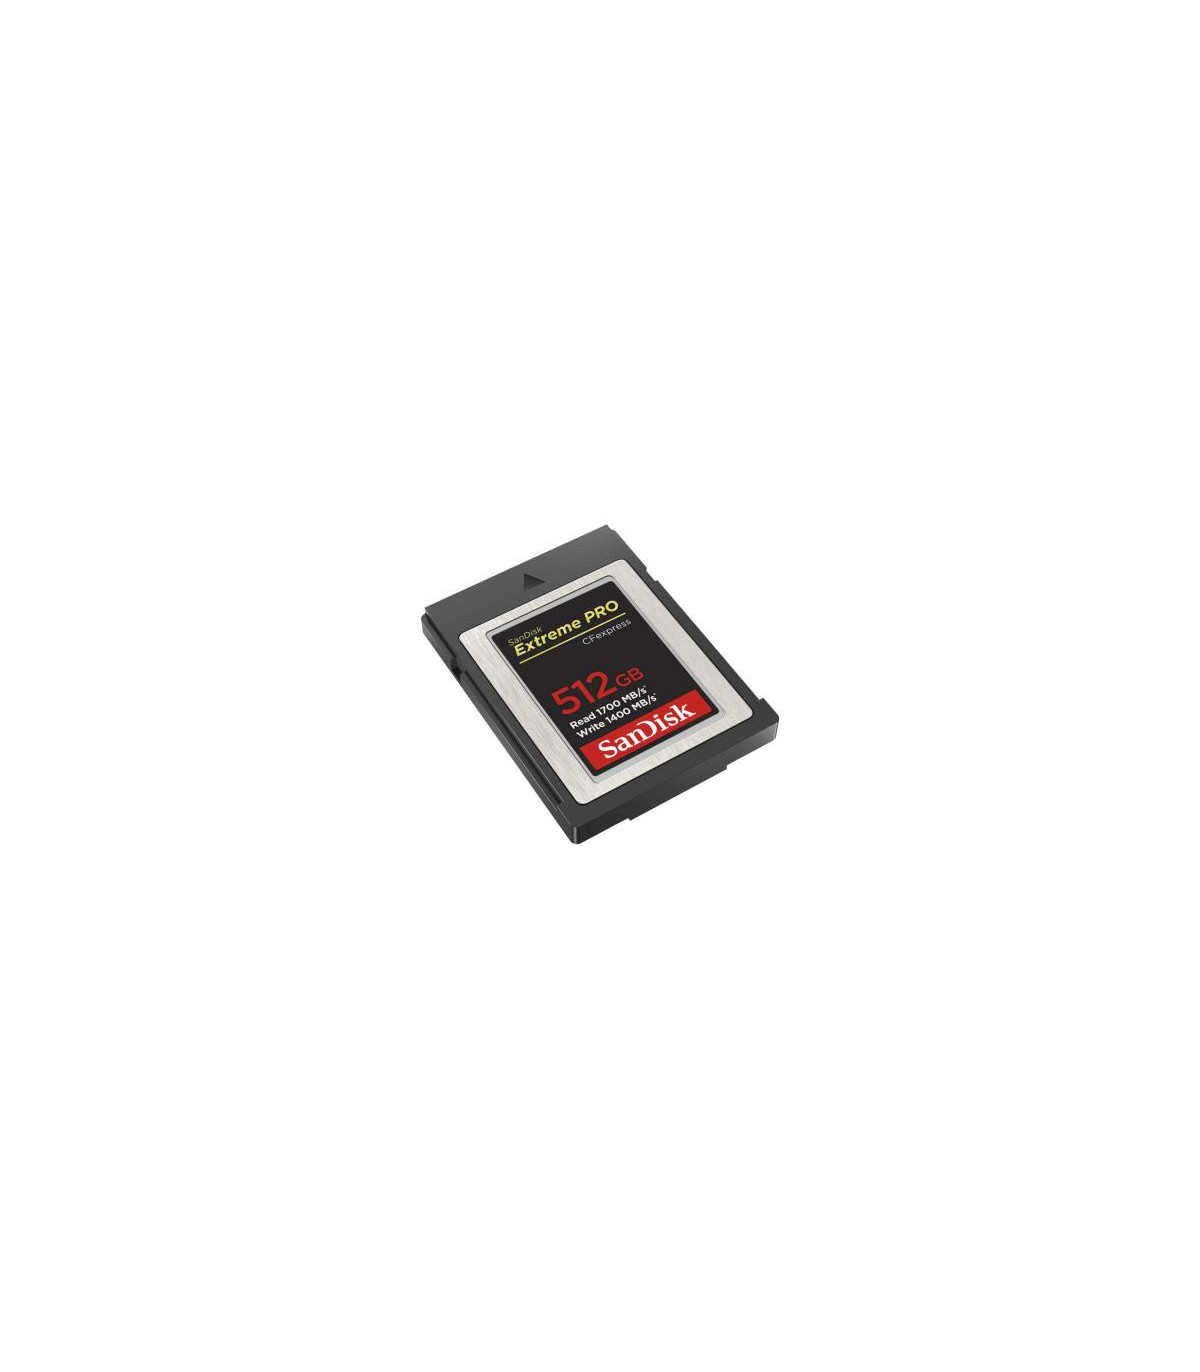 SanDisk 32 Go Extreme PRO carte SDHC + RescuePRO Deluxe, jusqu'à